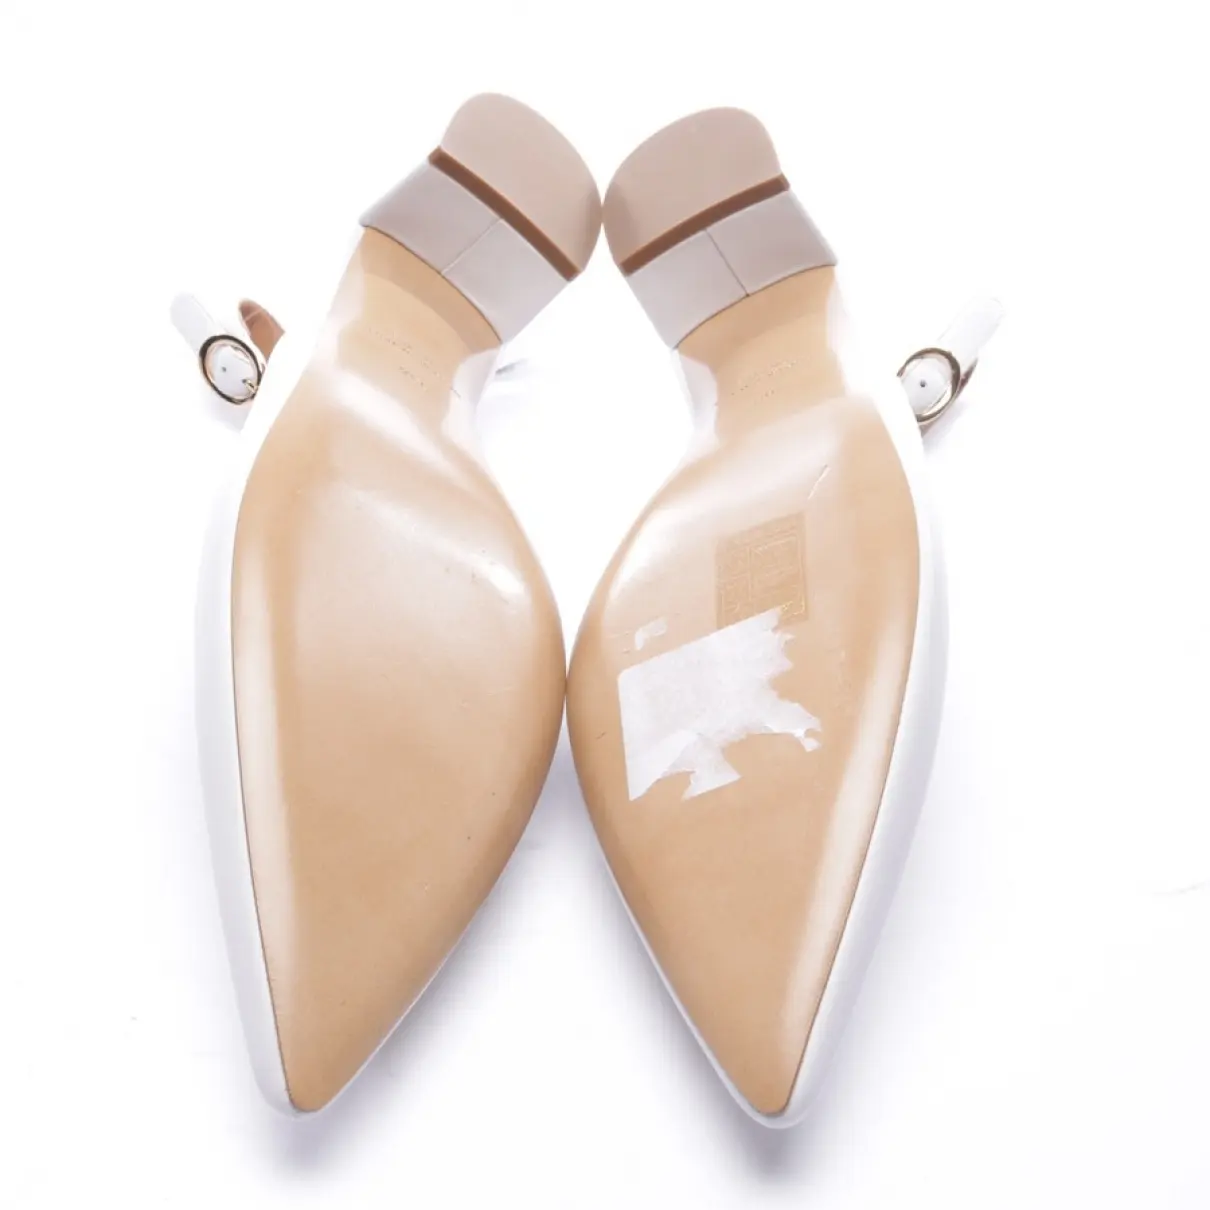 Leather heels Mansur Gavriel